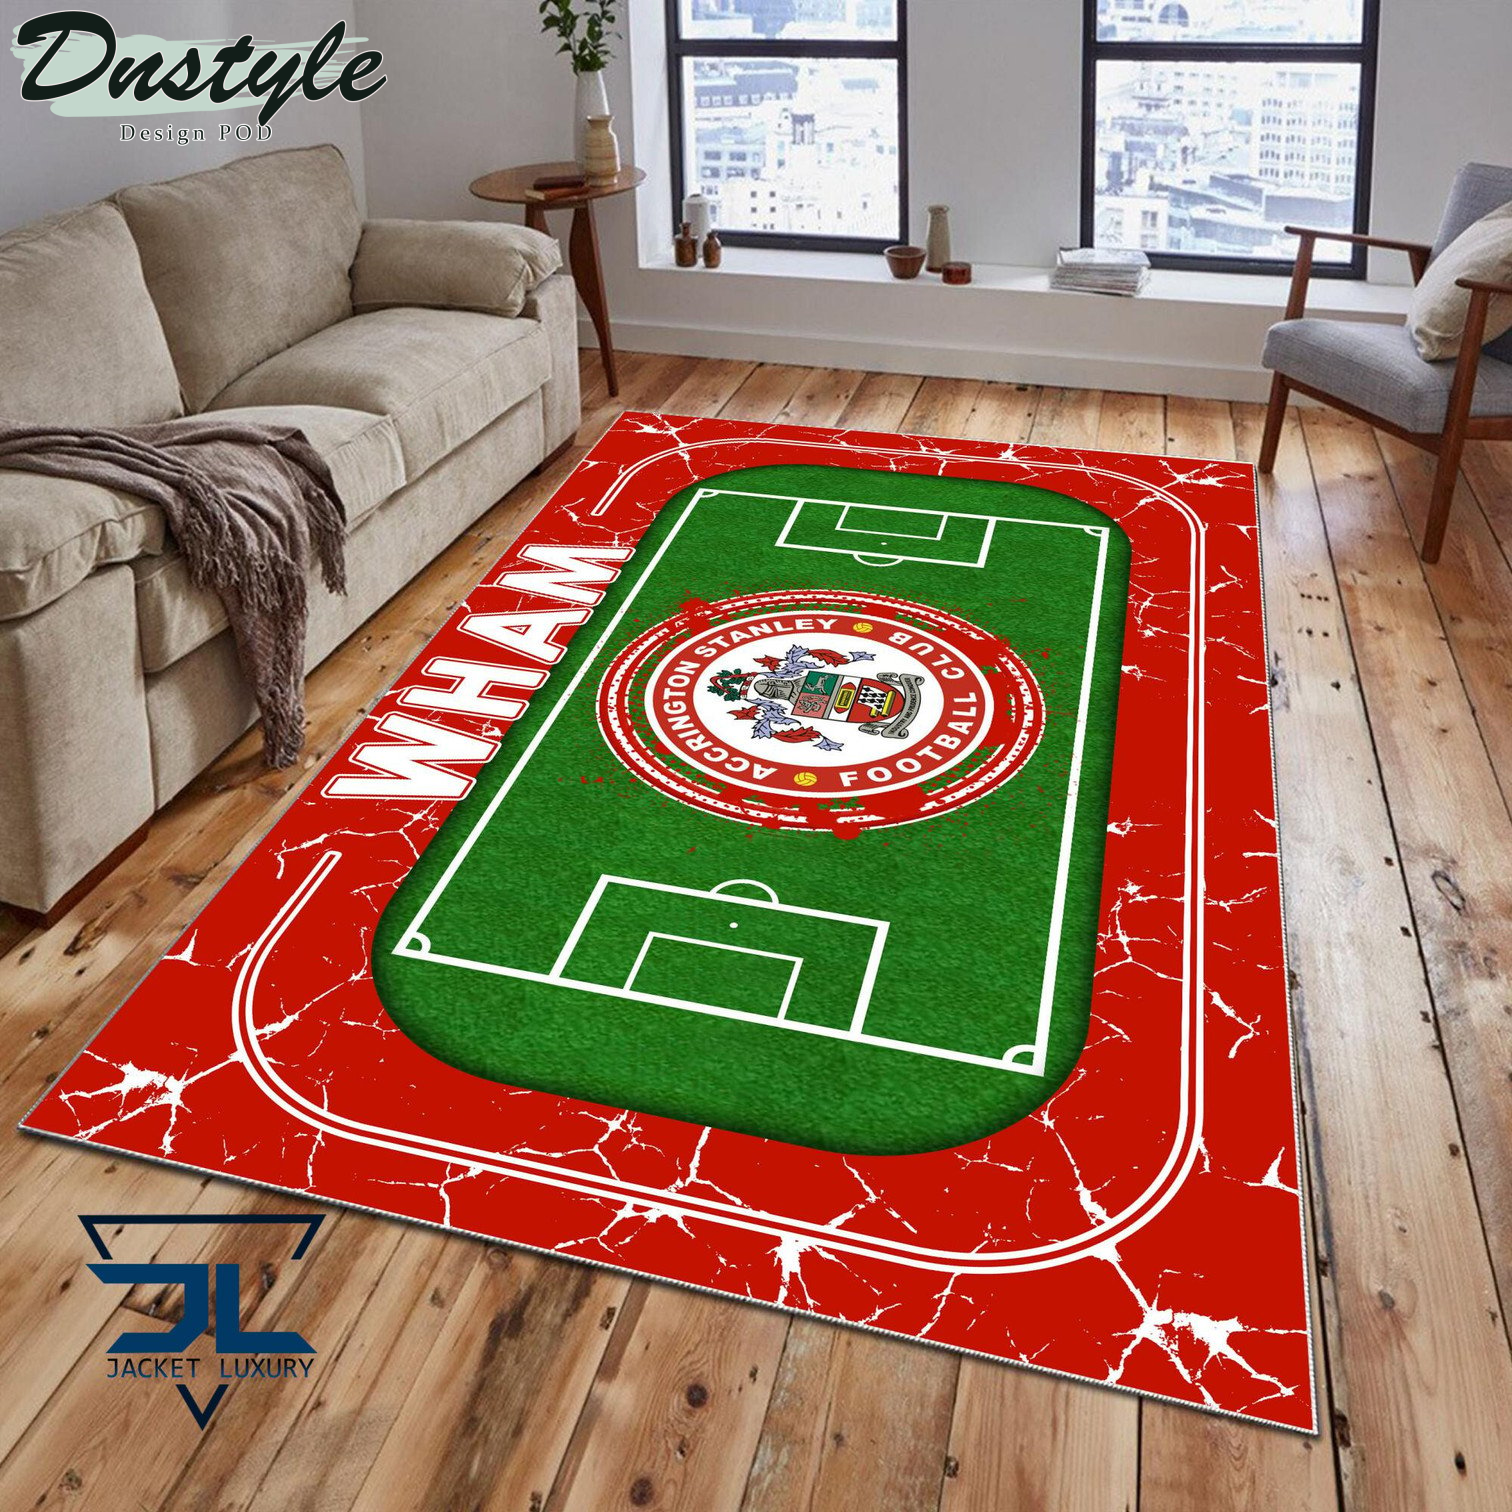 Swansea City A.F.C Rug Carpet